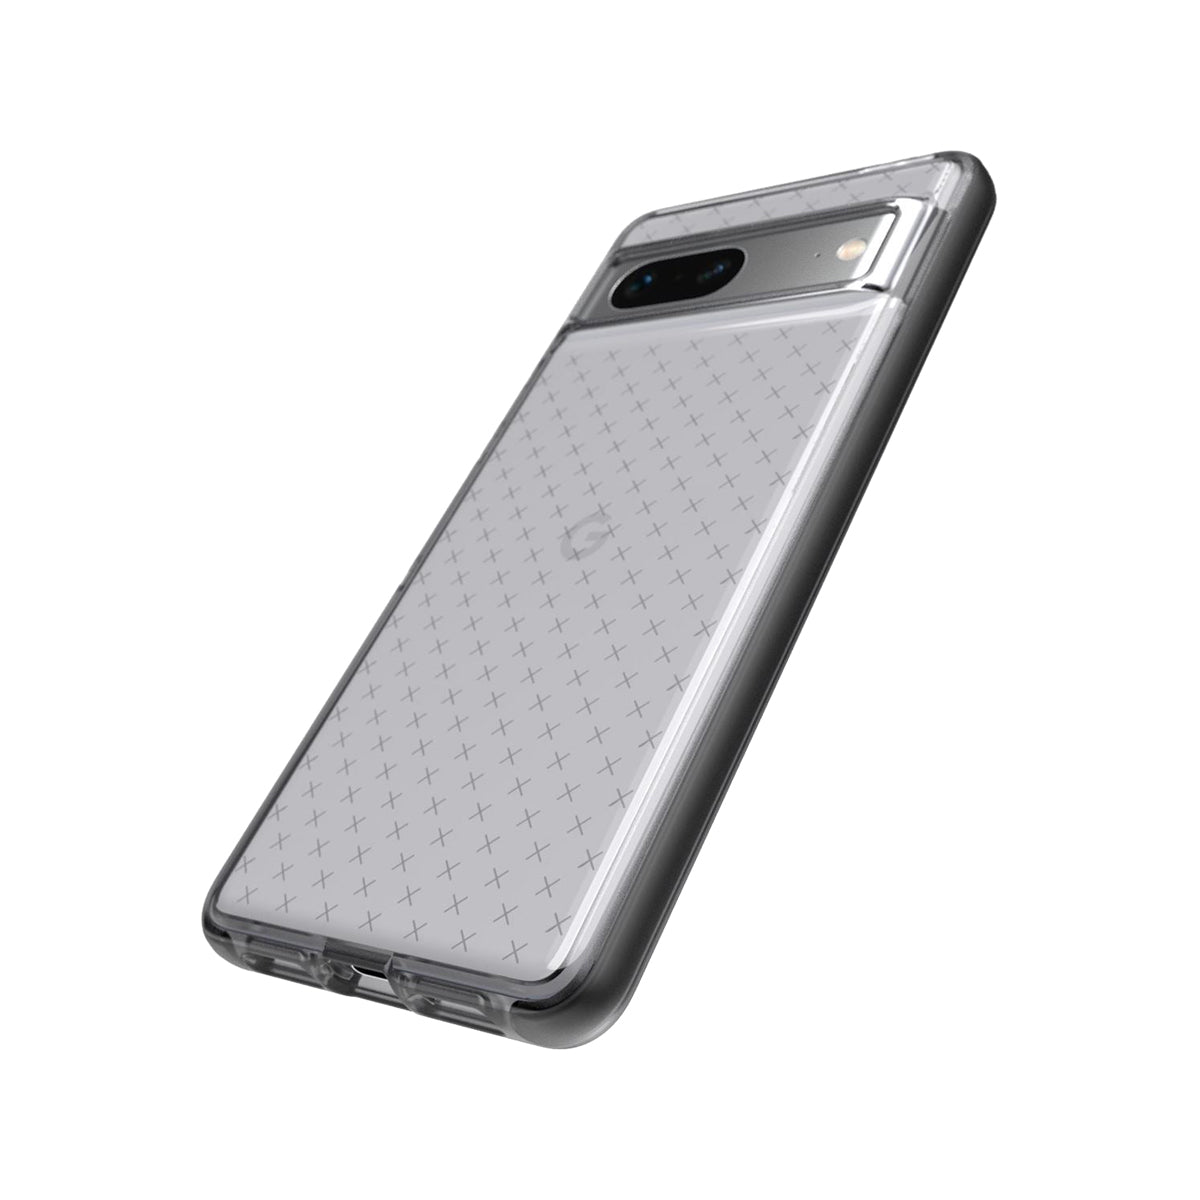 Tech21 EvoCheck Phone Case for Pixal 7 - Smokey/Black.